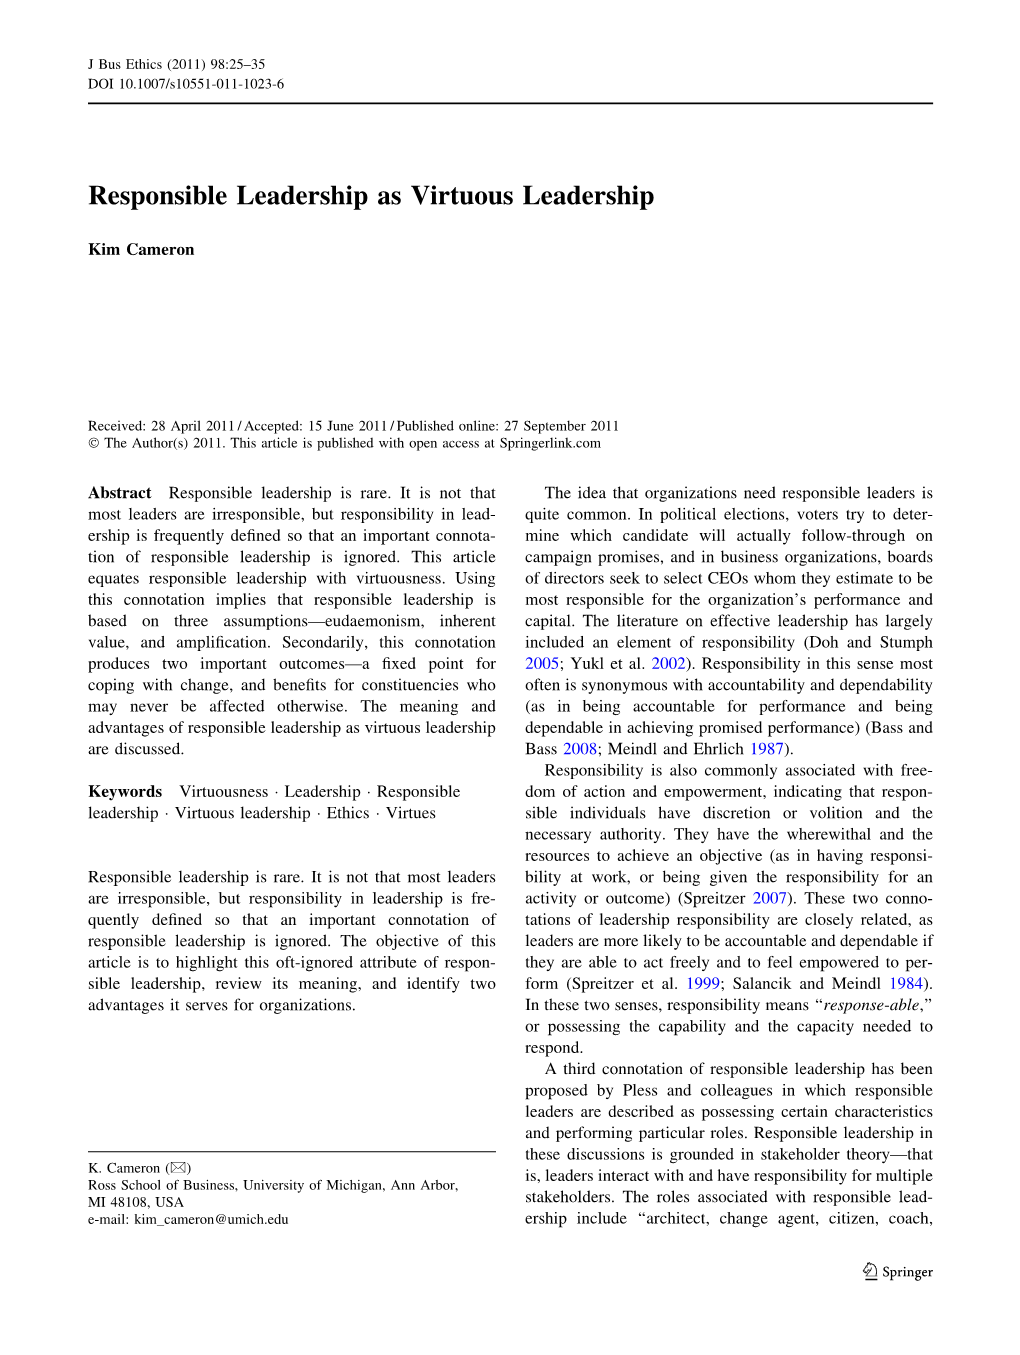 Responsible Leadership As Virtuous Leadership